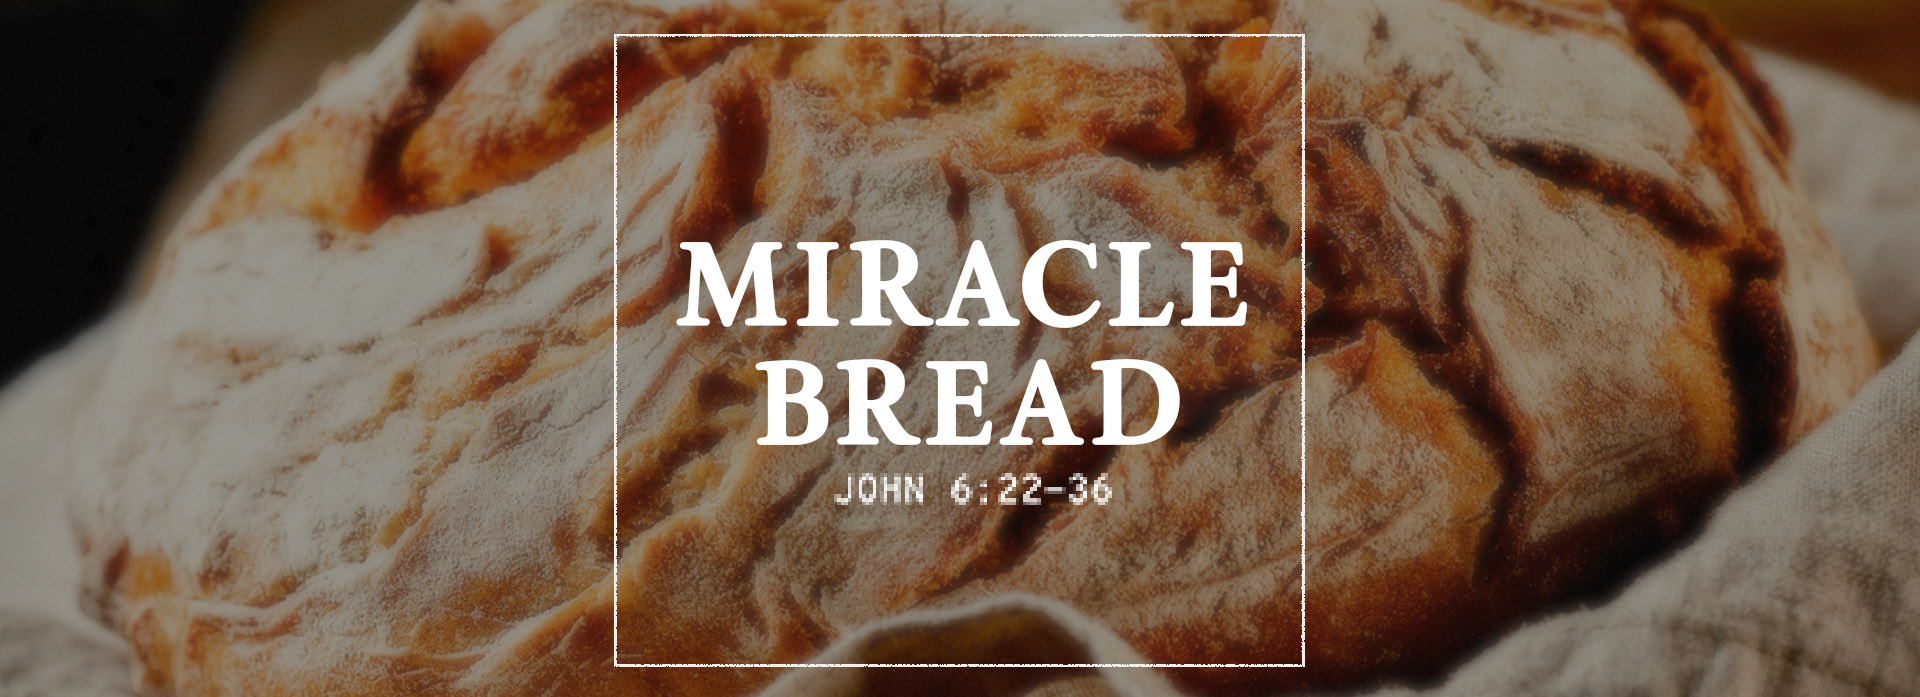 miracle_bread_1920x697.jpg